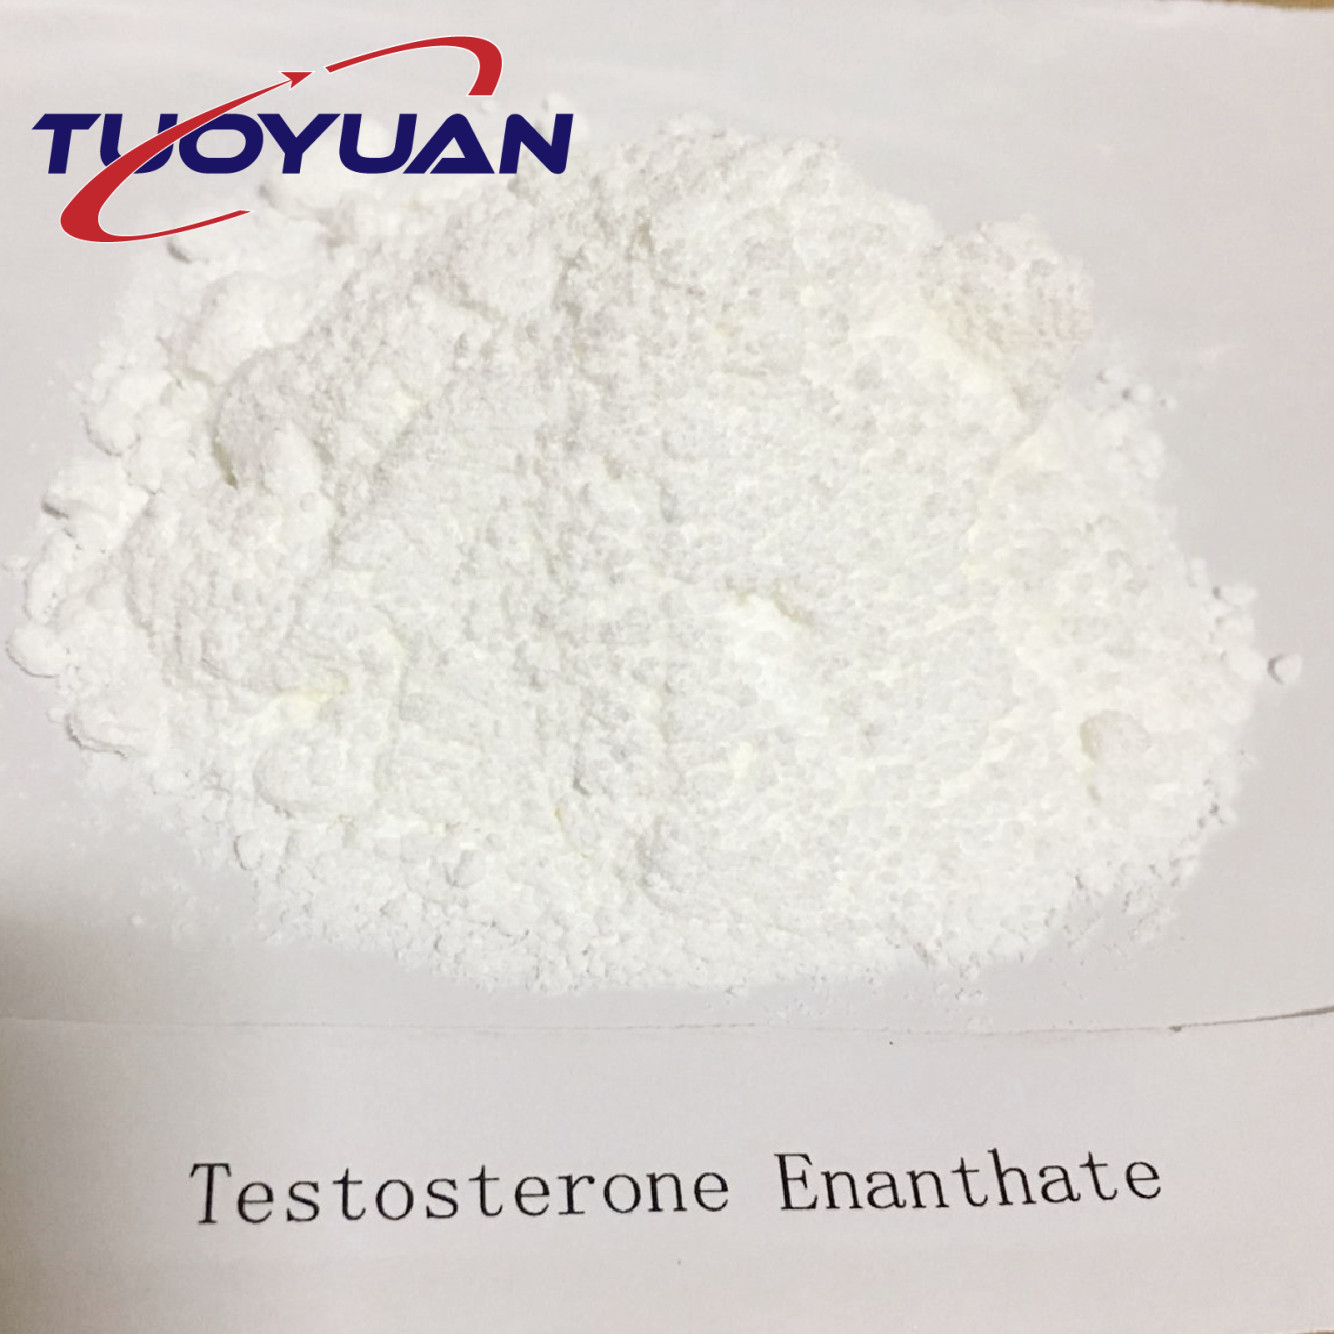 Testosterone enanthate